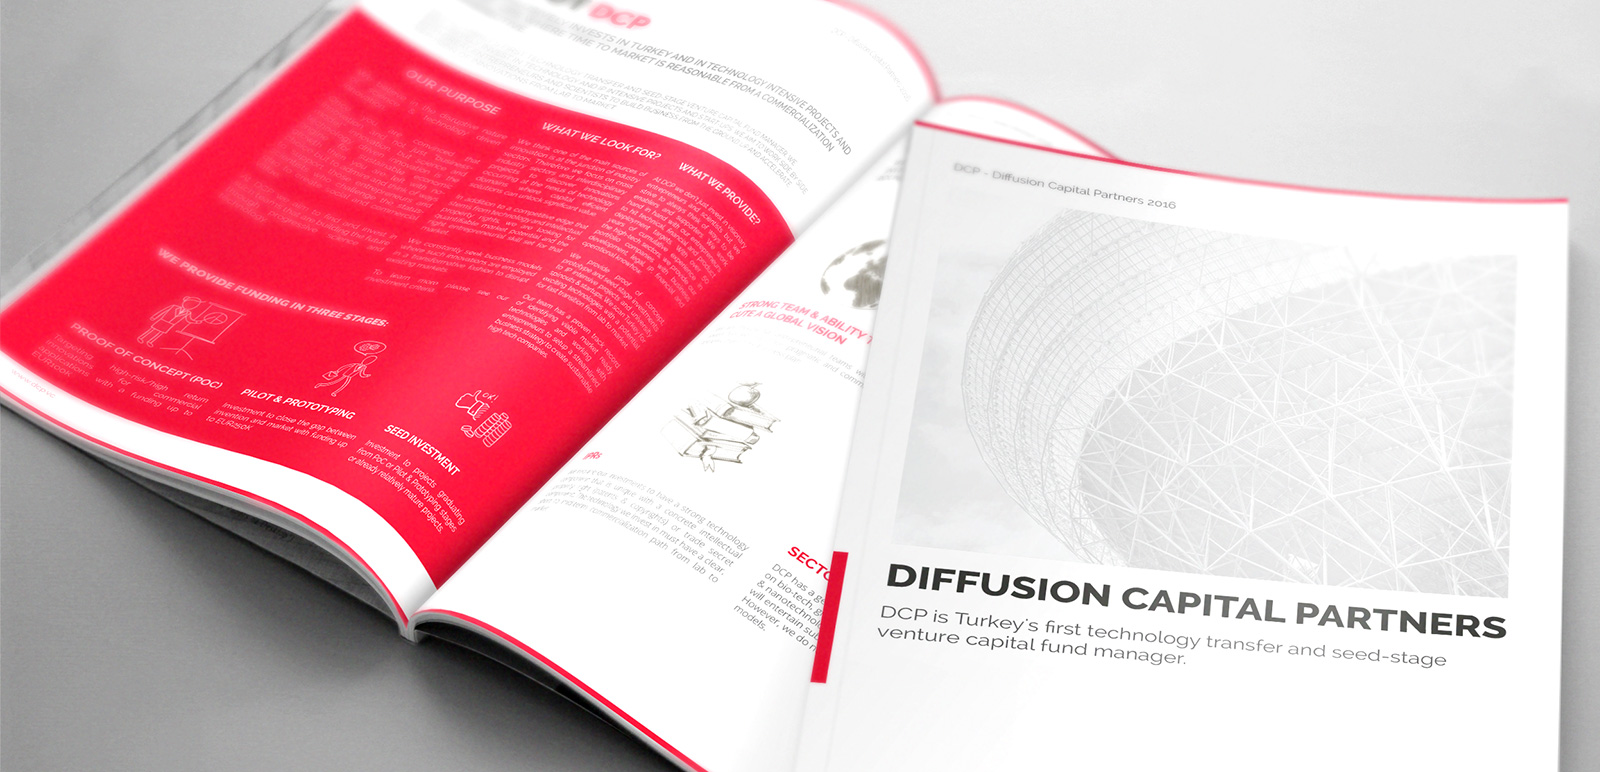 DCP Diffusion Capital Partners Brochure 1